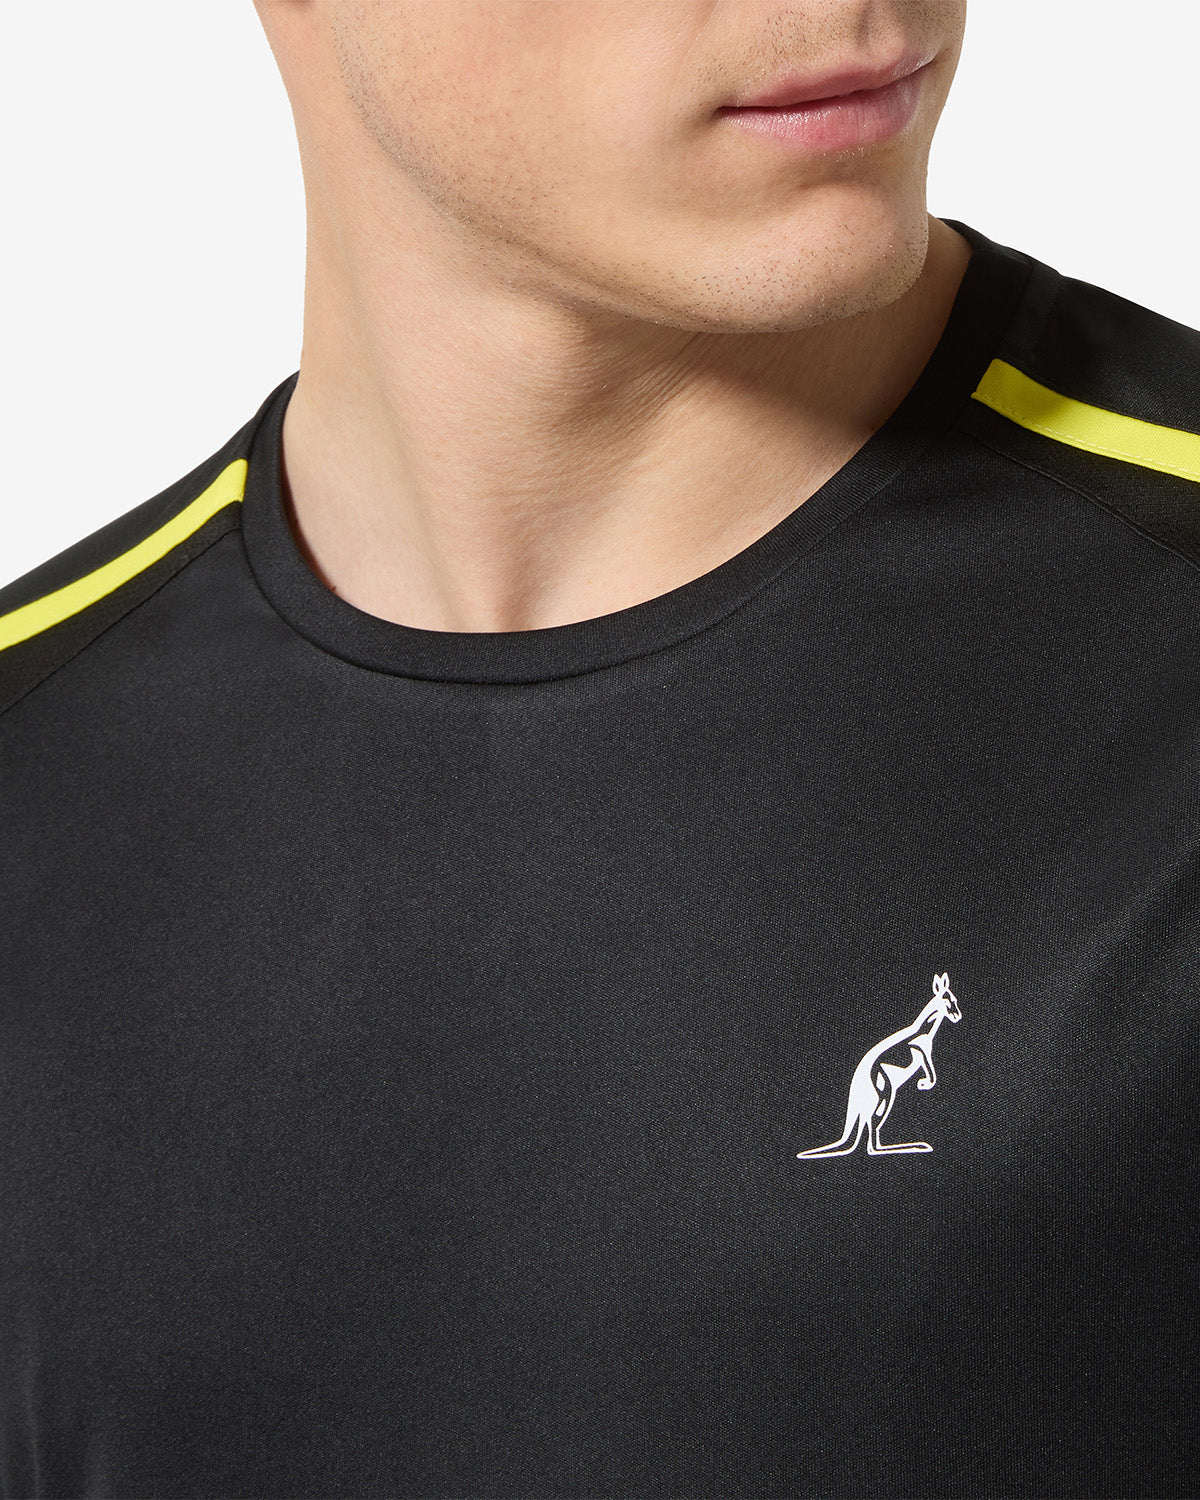 Energy Sleeves T-shirt: Australian Tennis